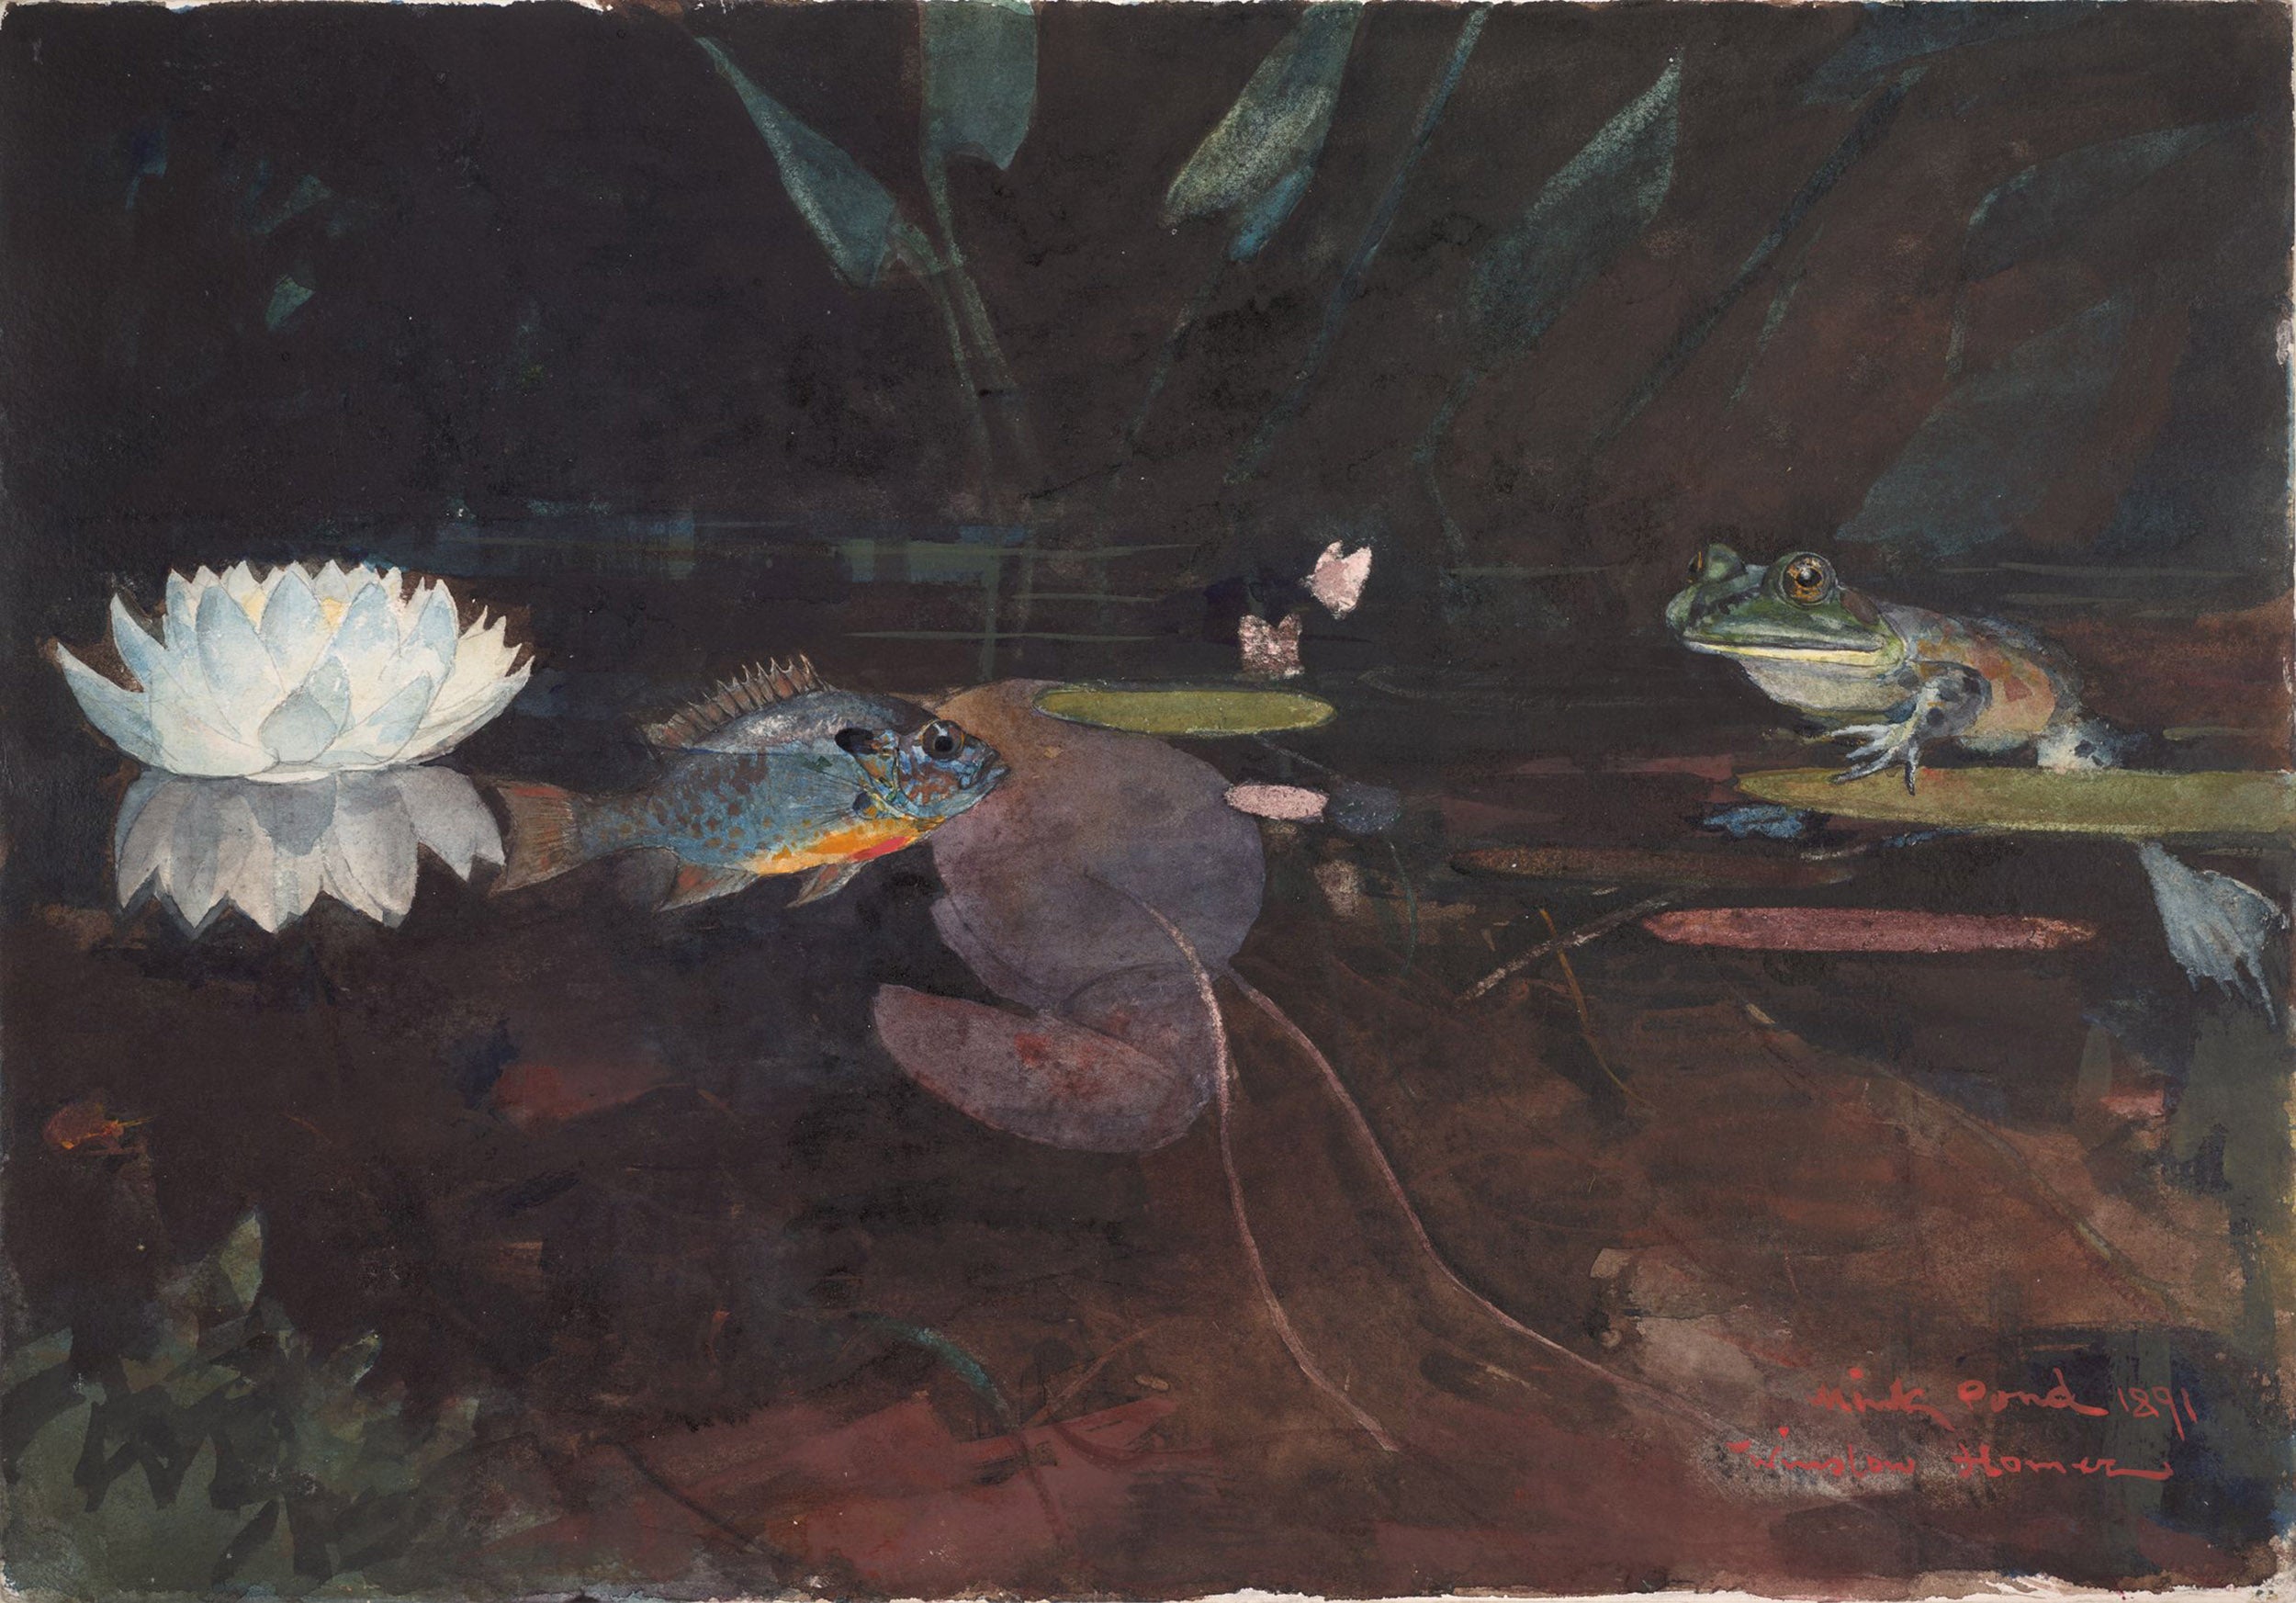 "Mink Pond" by Winslow Homer.